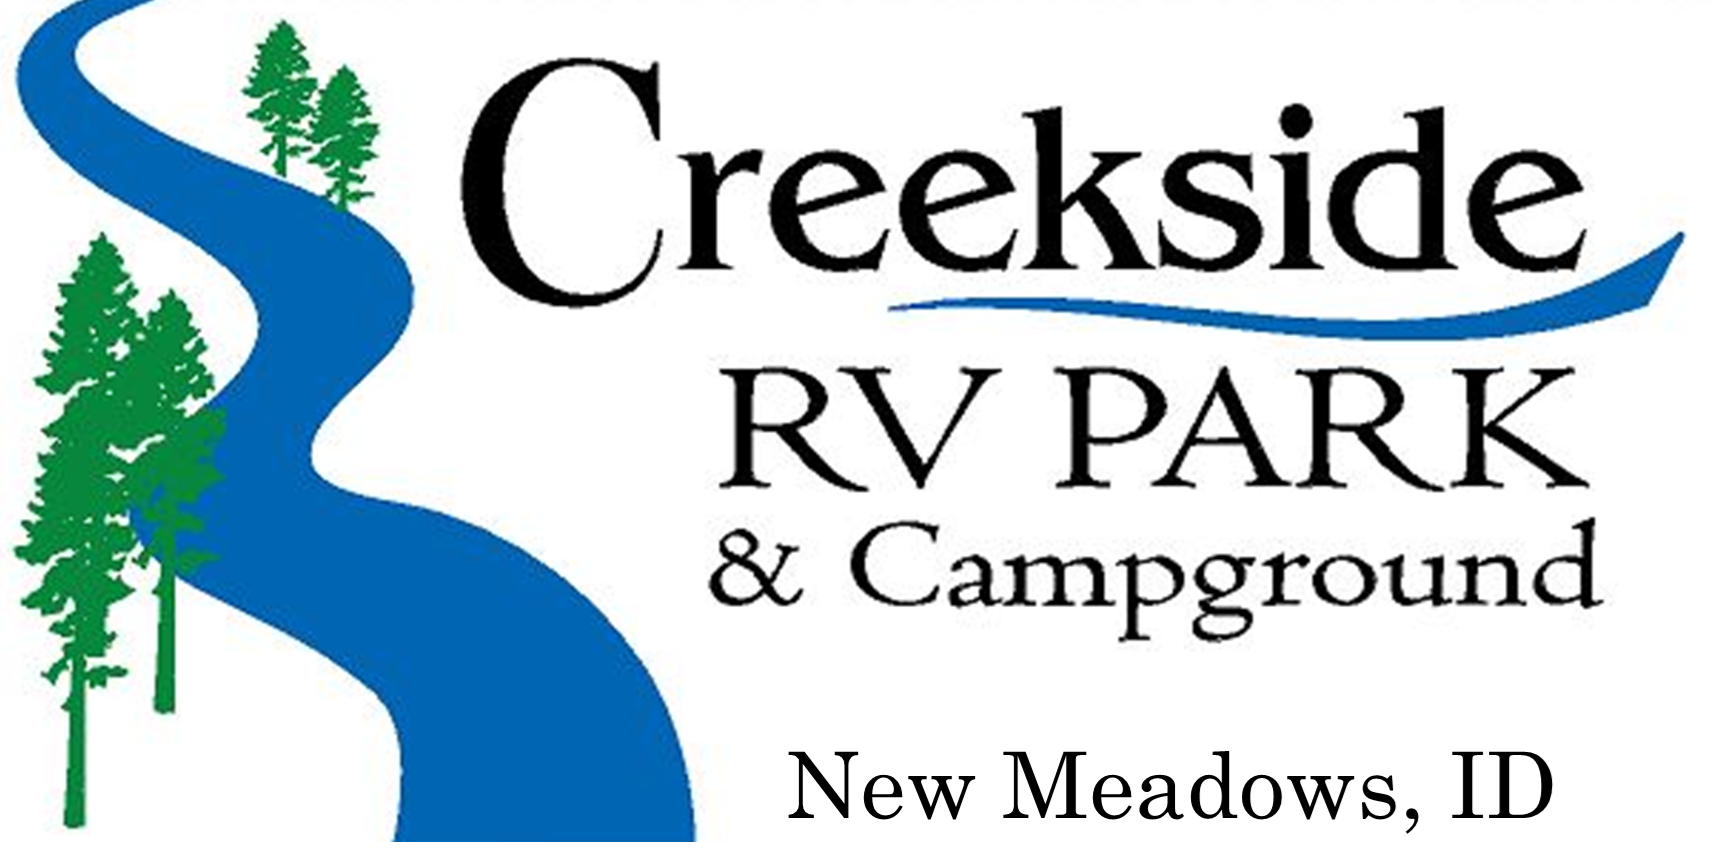 Creekside RV Park & Campground